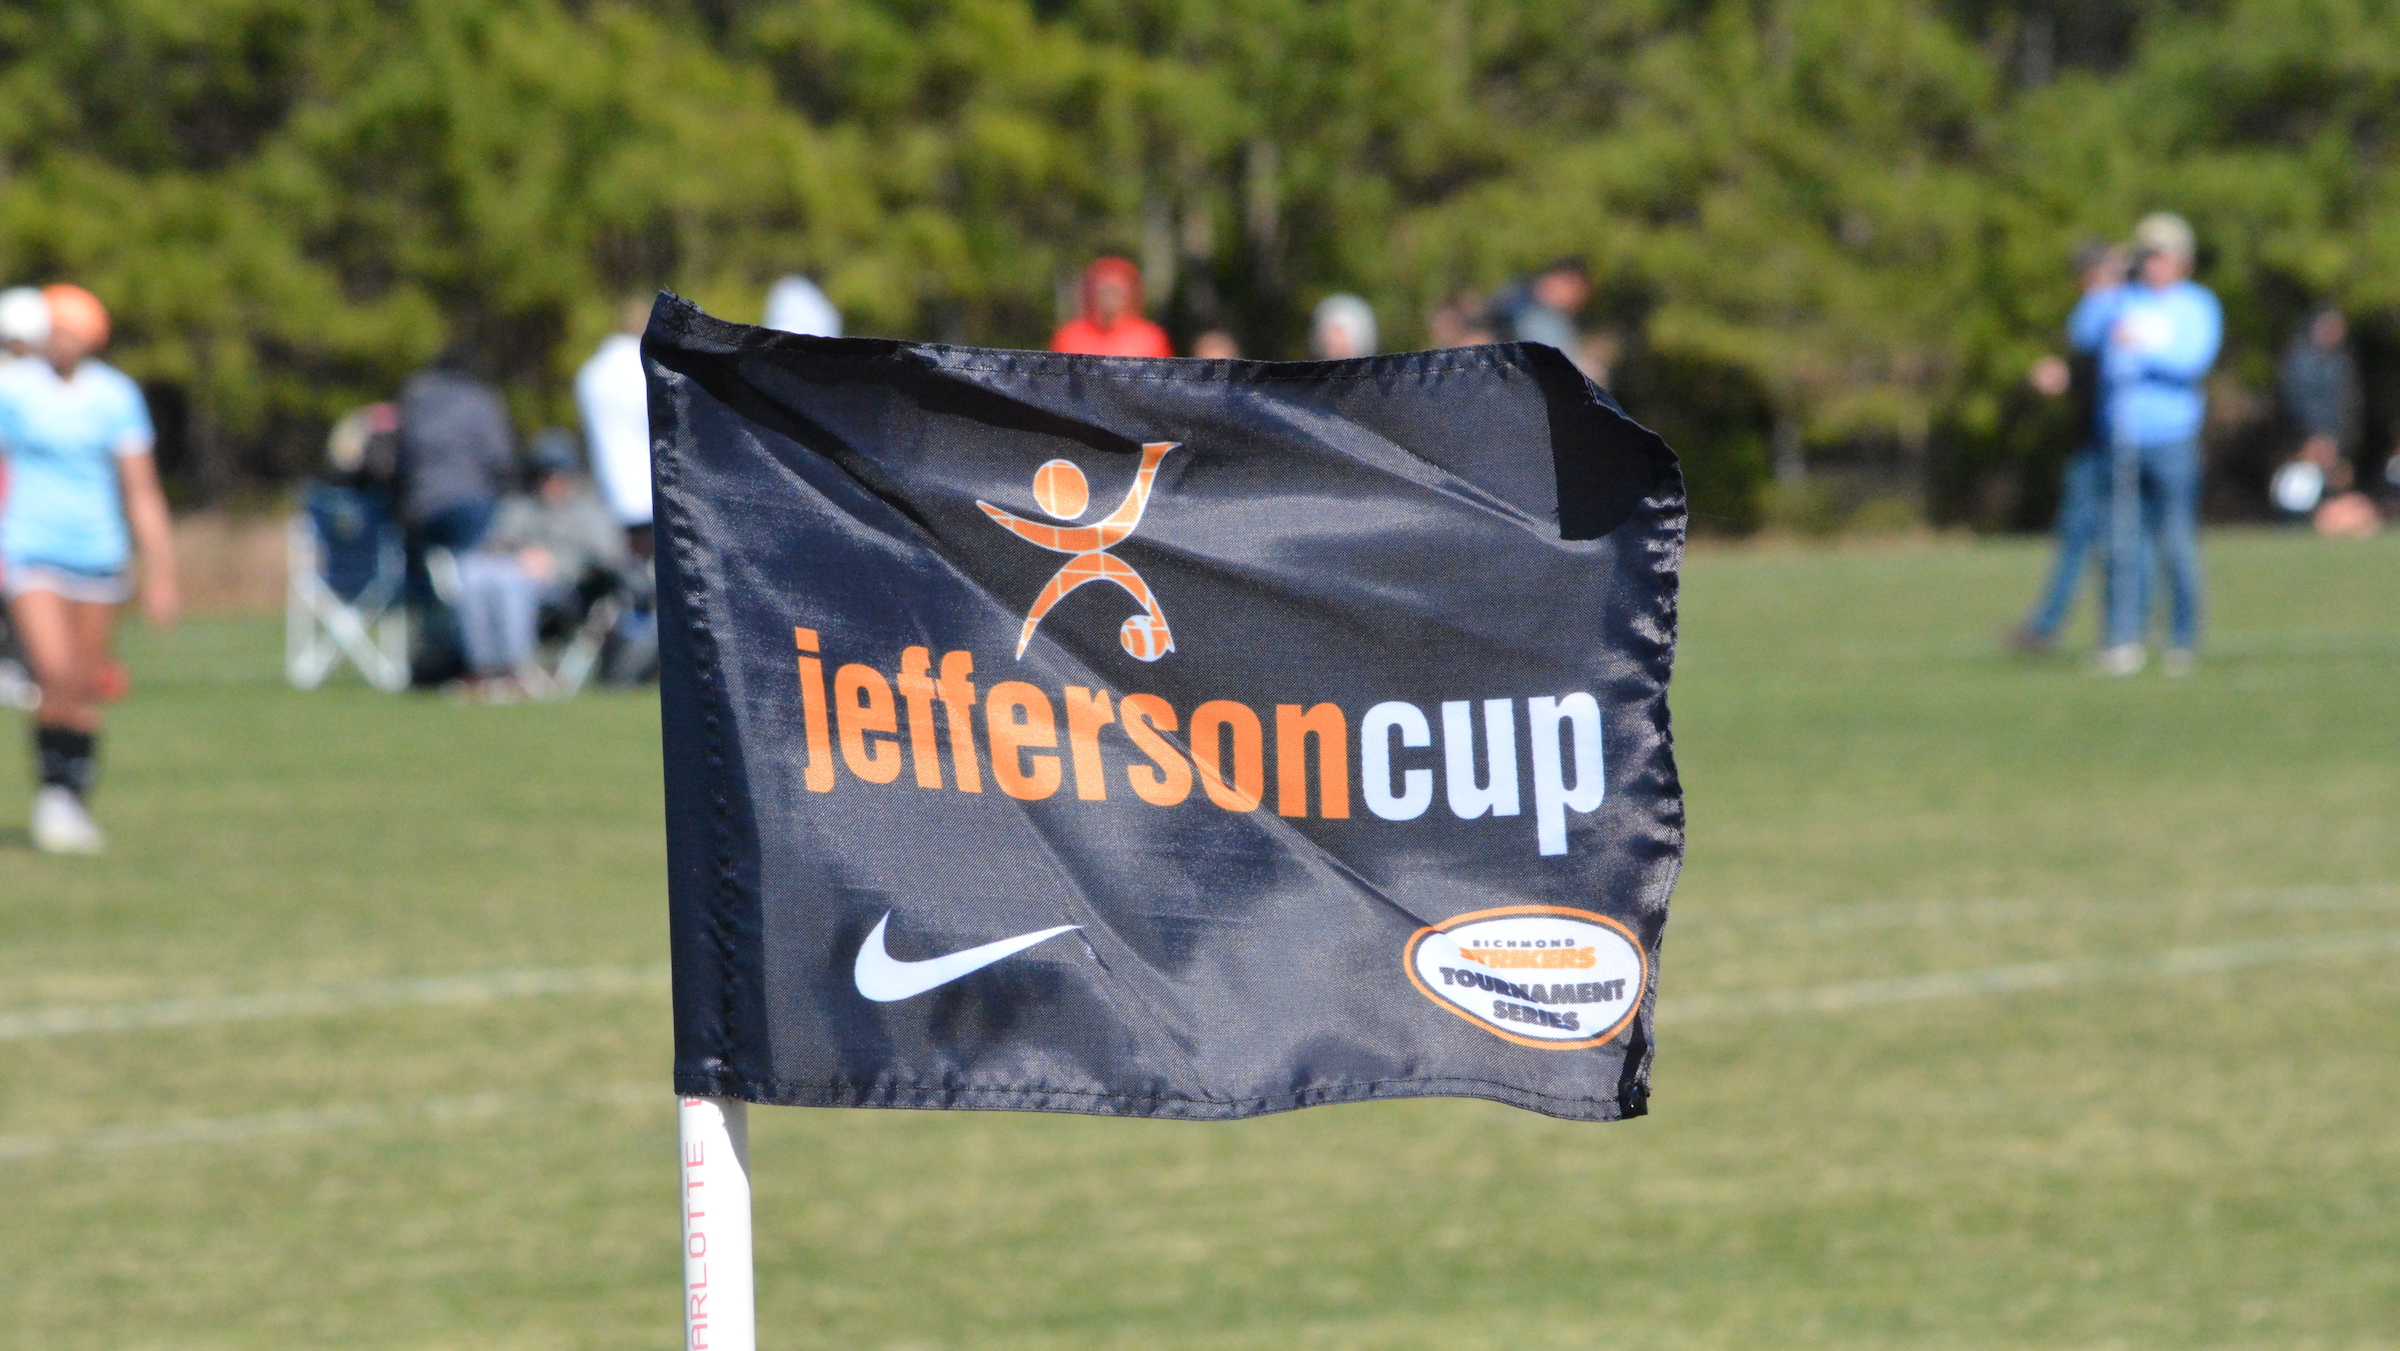 Jefferson Cup U10U14 Girls Weekend 2020 acceptance list and brackets